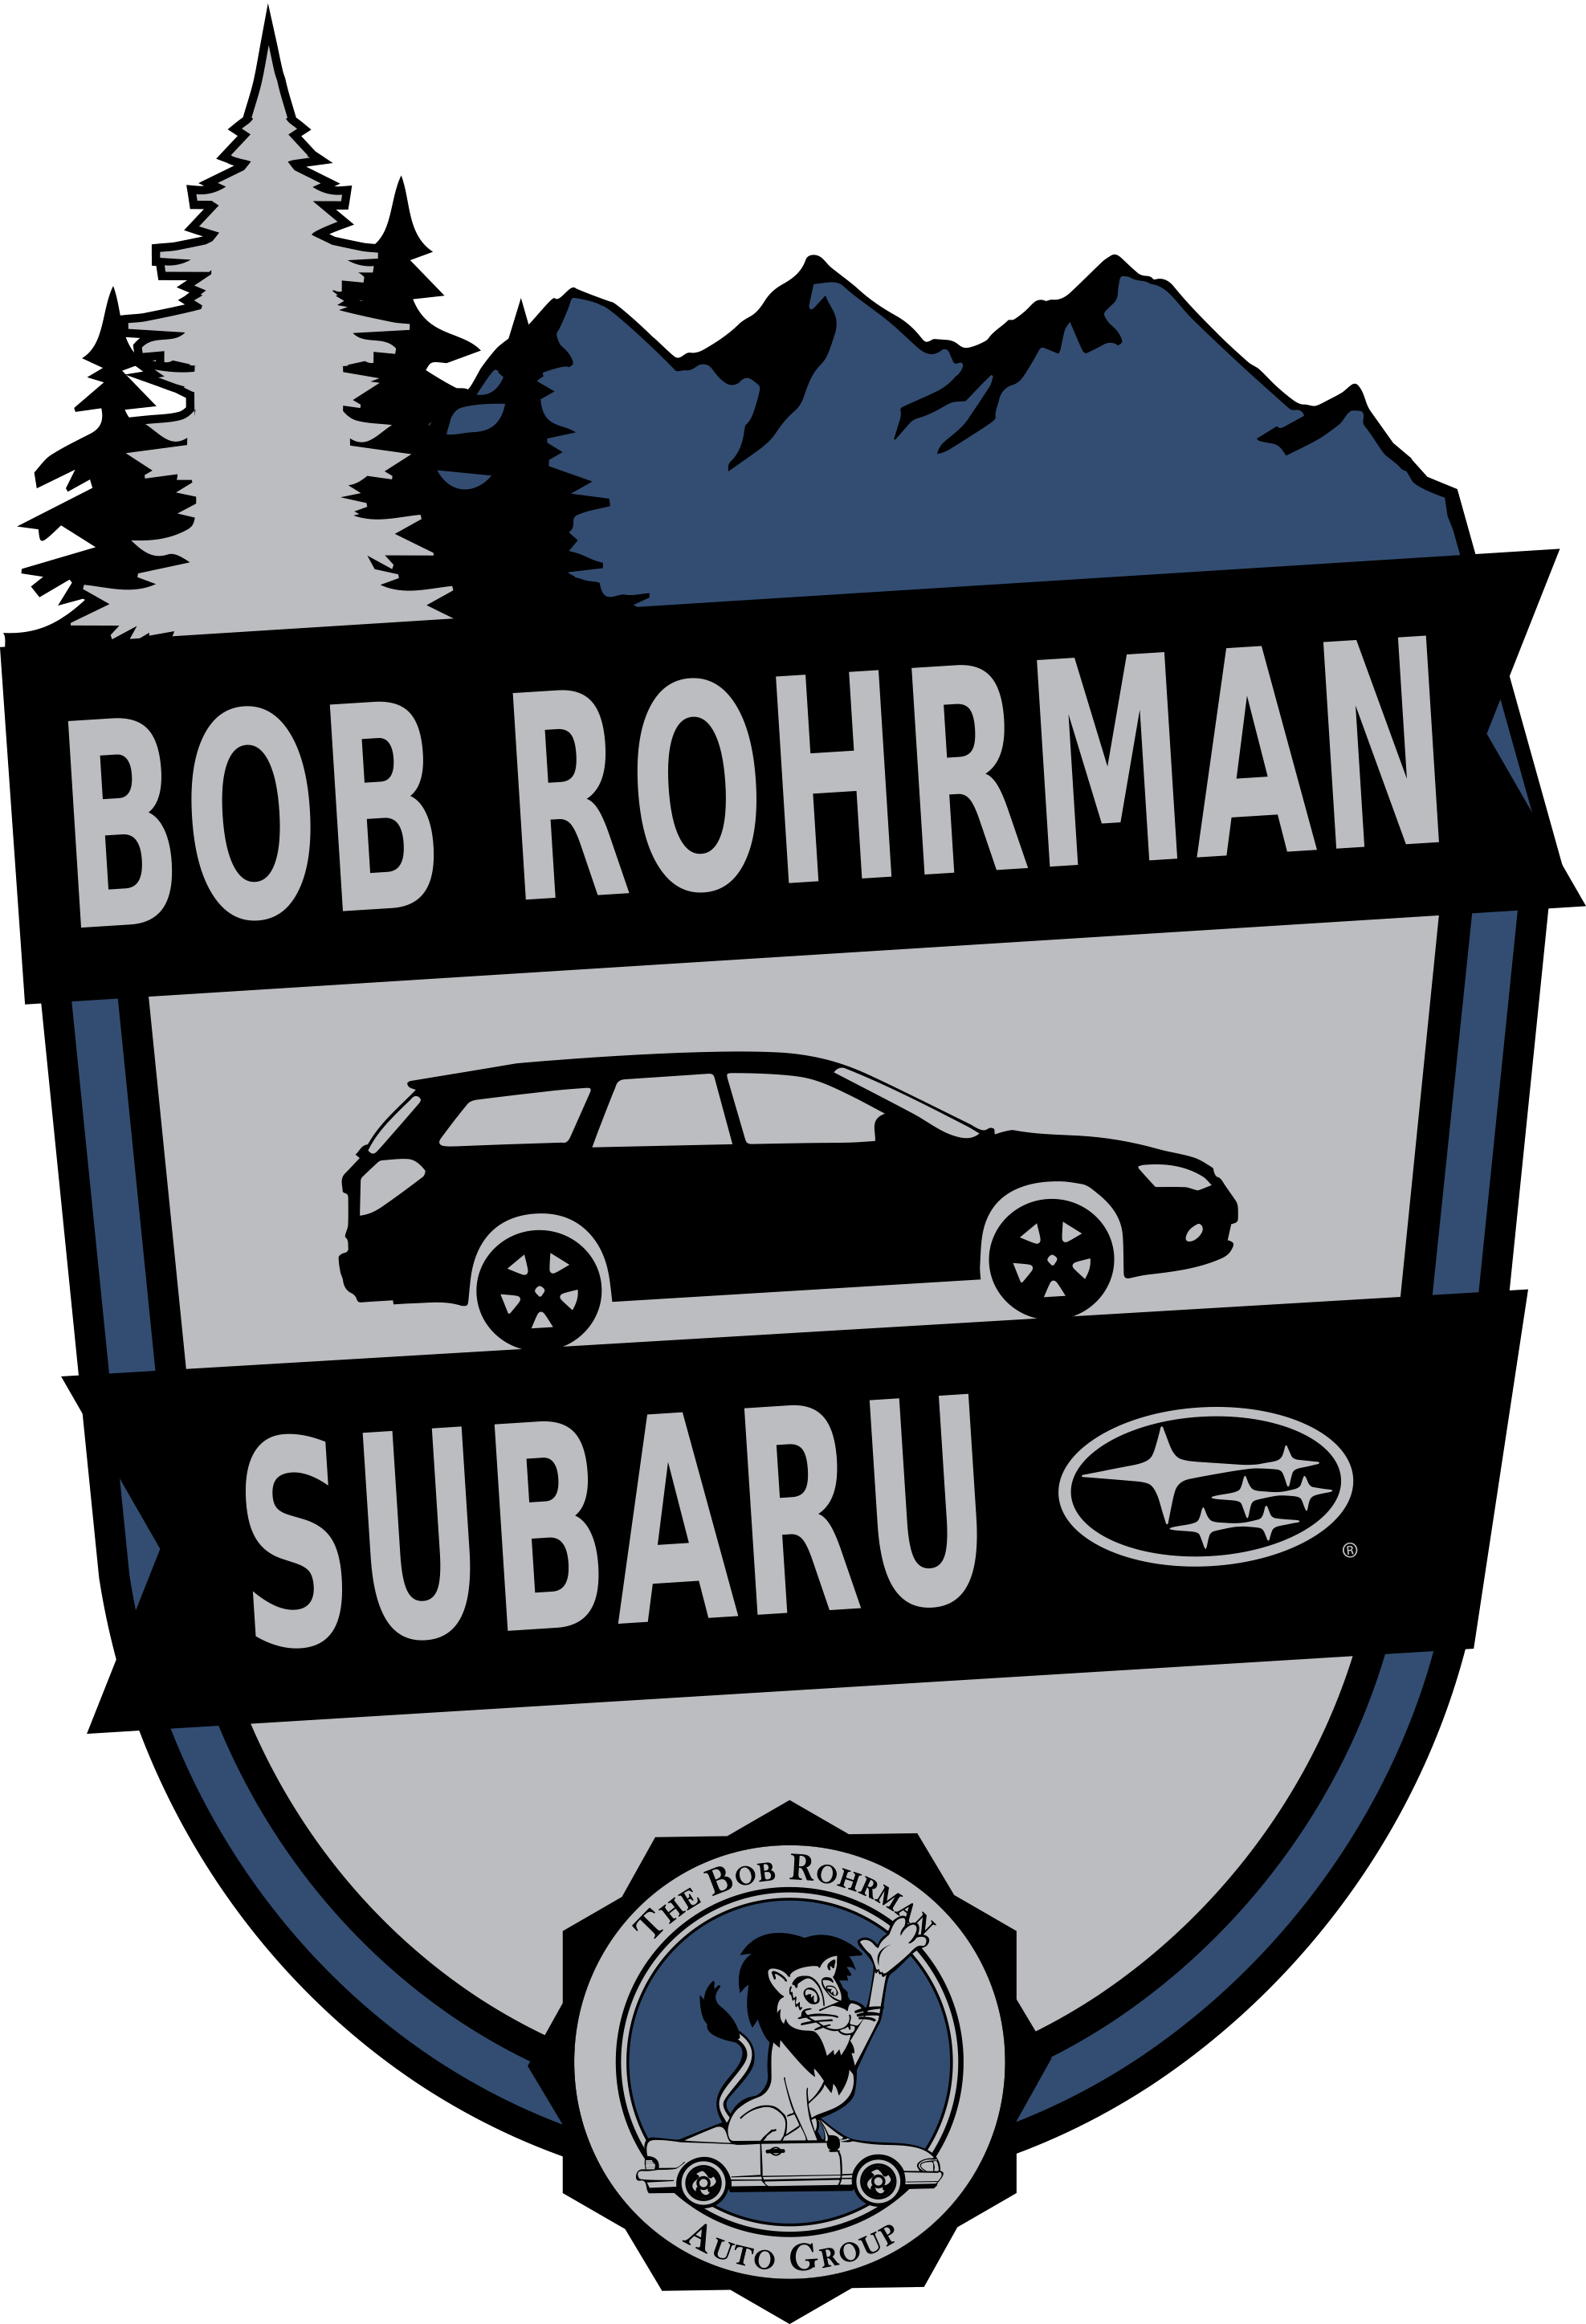 2018 Subaru Logo - Used 2018 Subaru Impreza 2.0i for Sale in Lafayette | Near ...